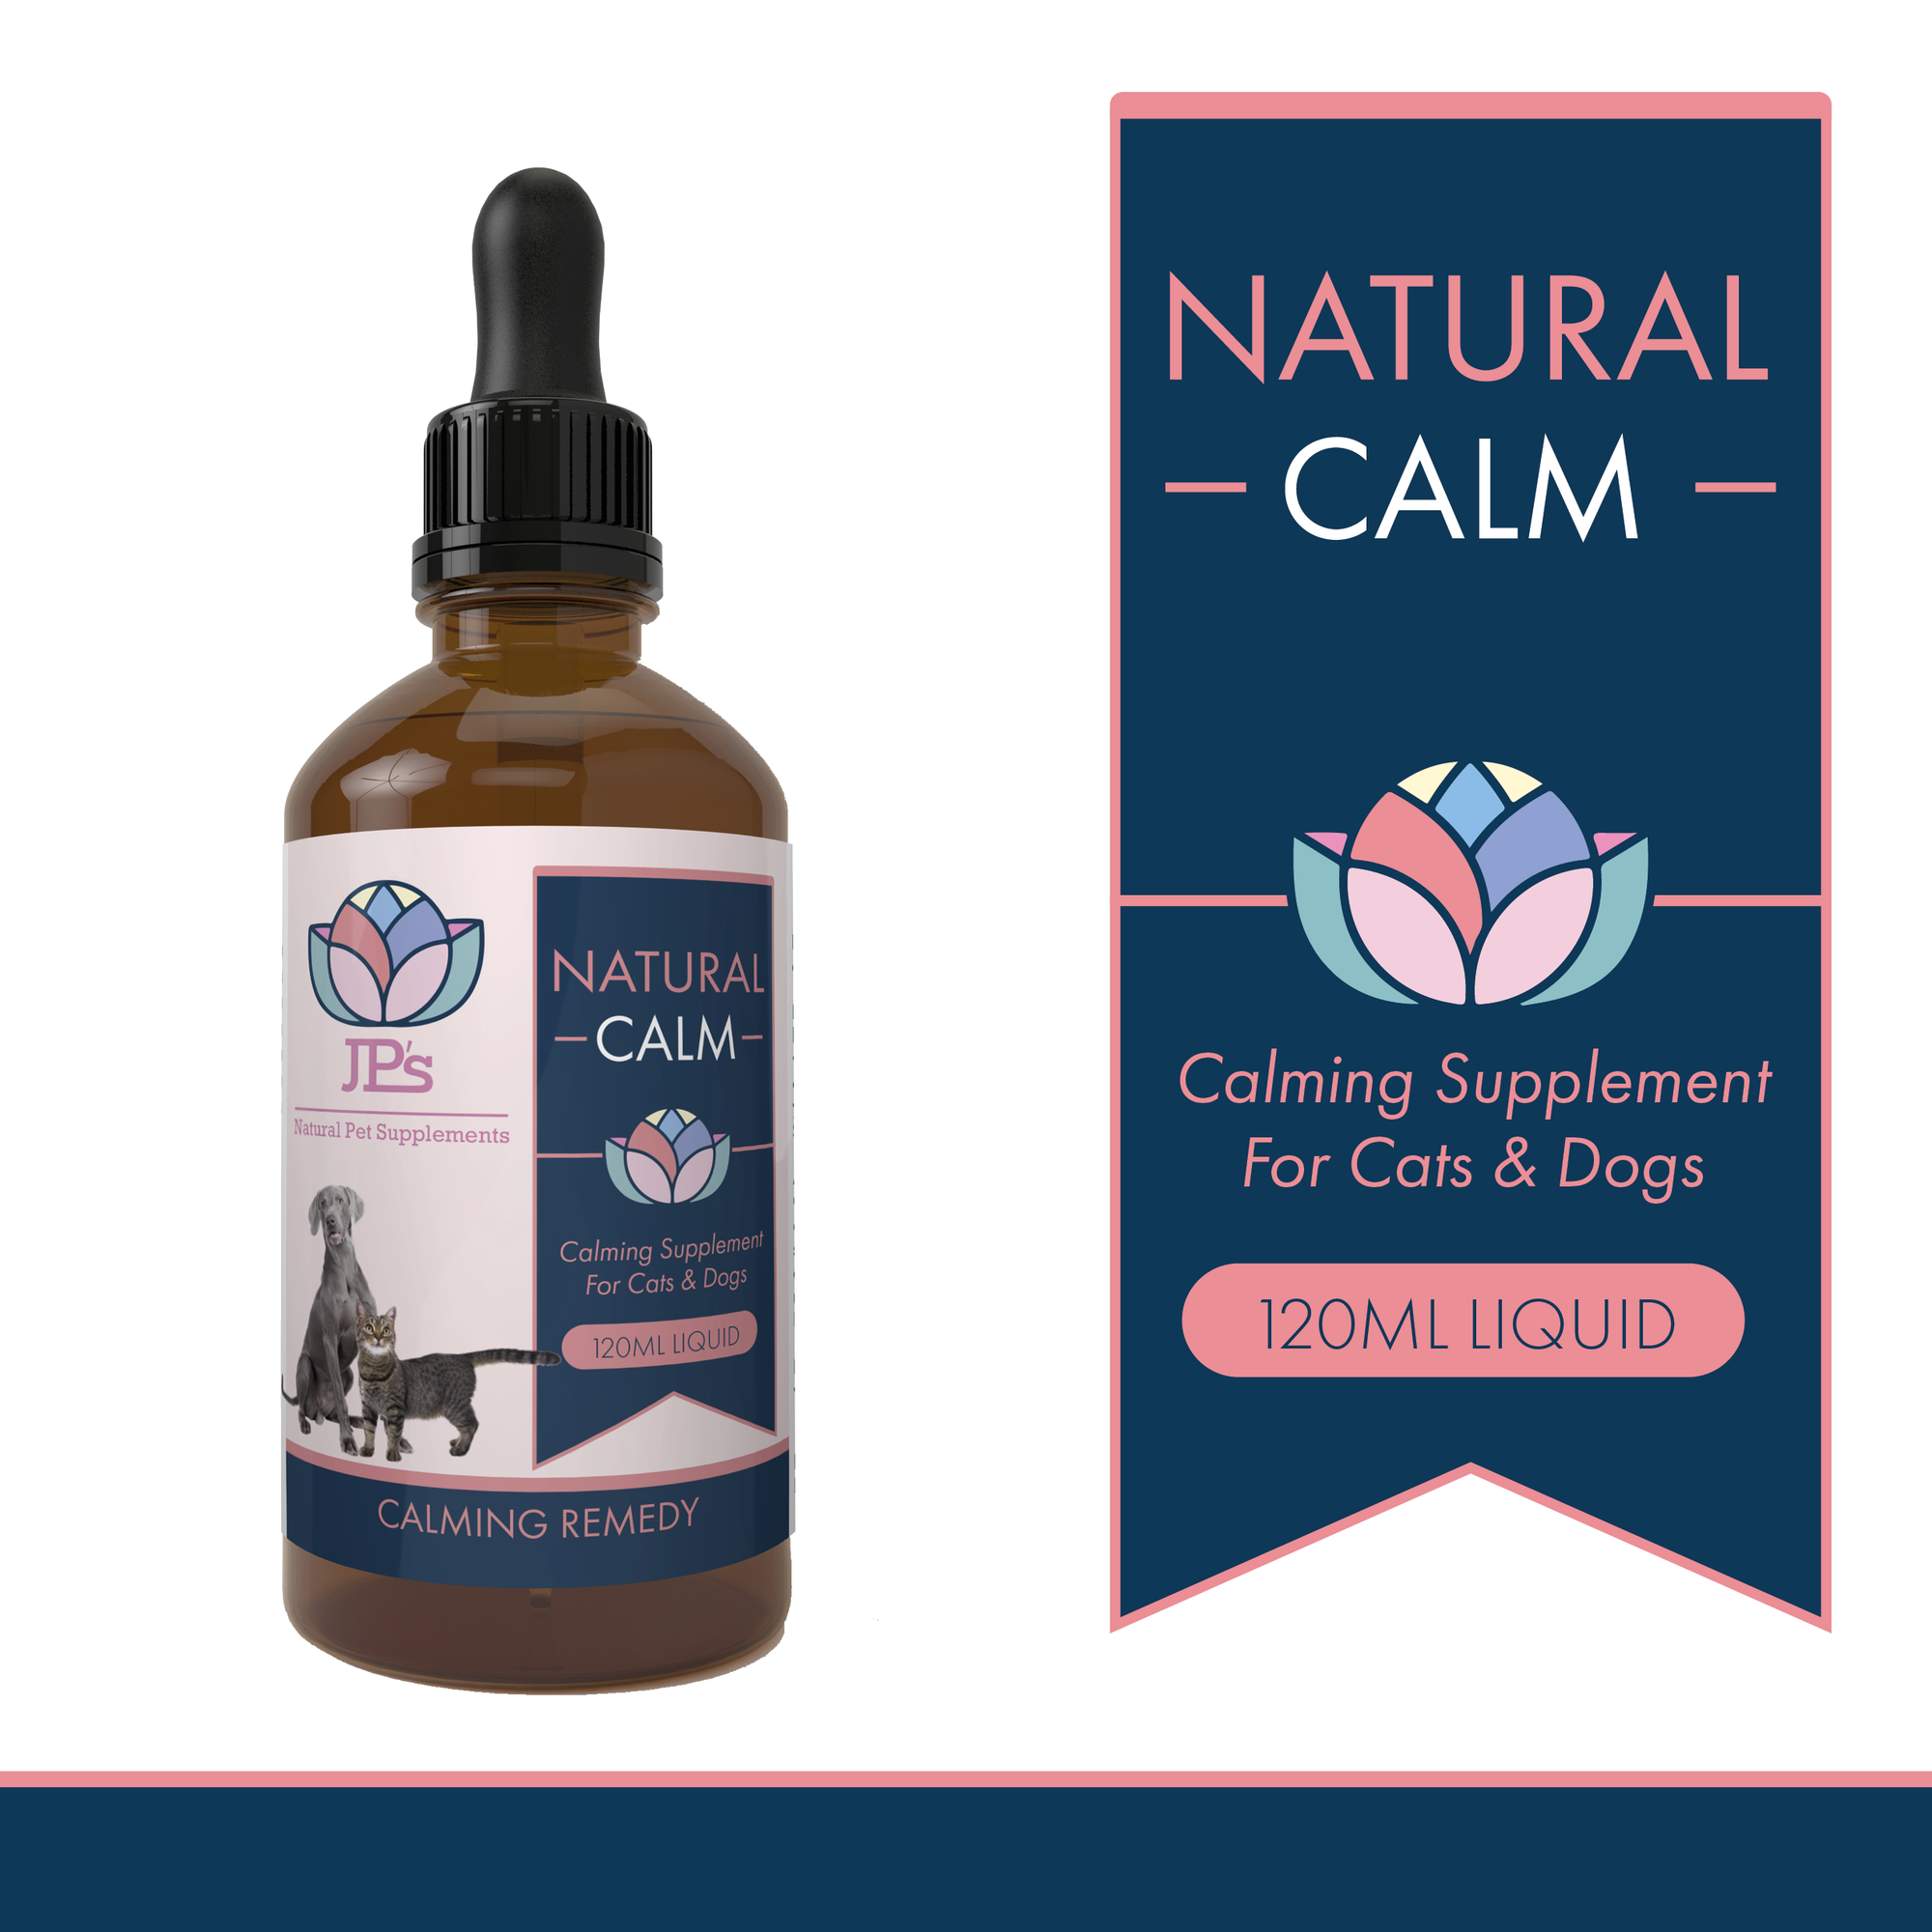 Liquid calming supplement for cats & dogs